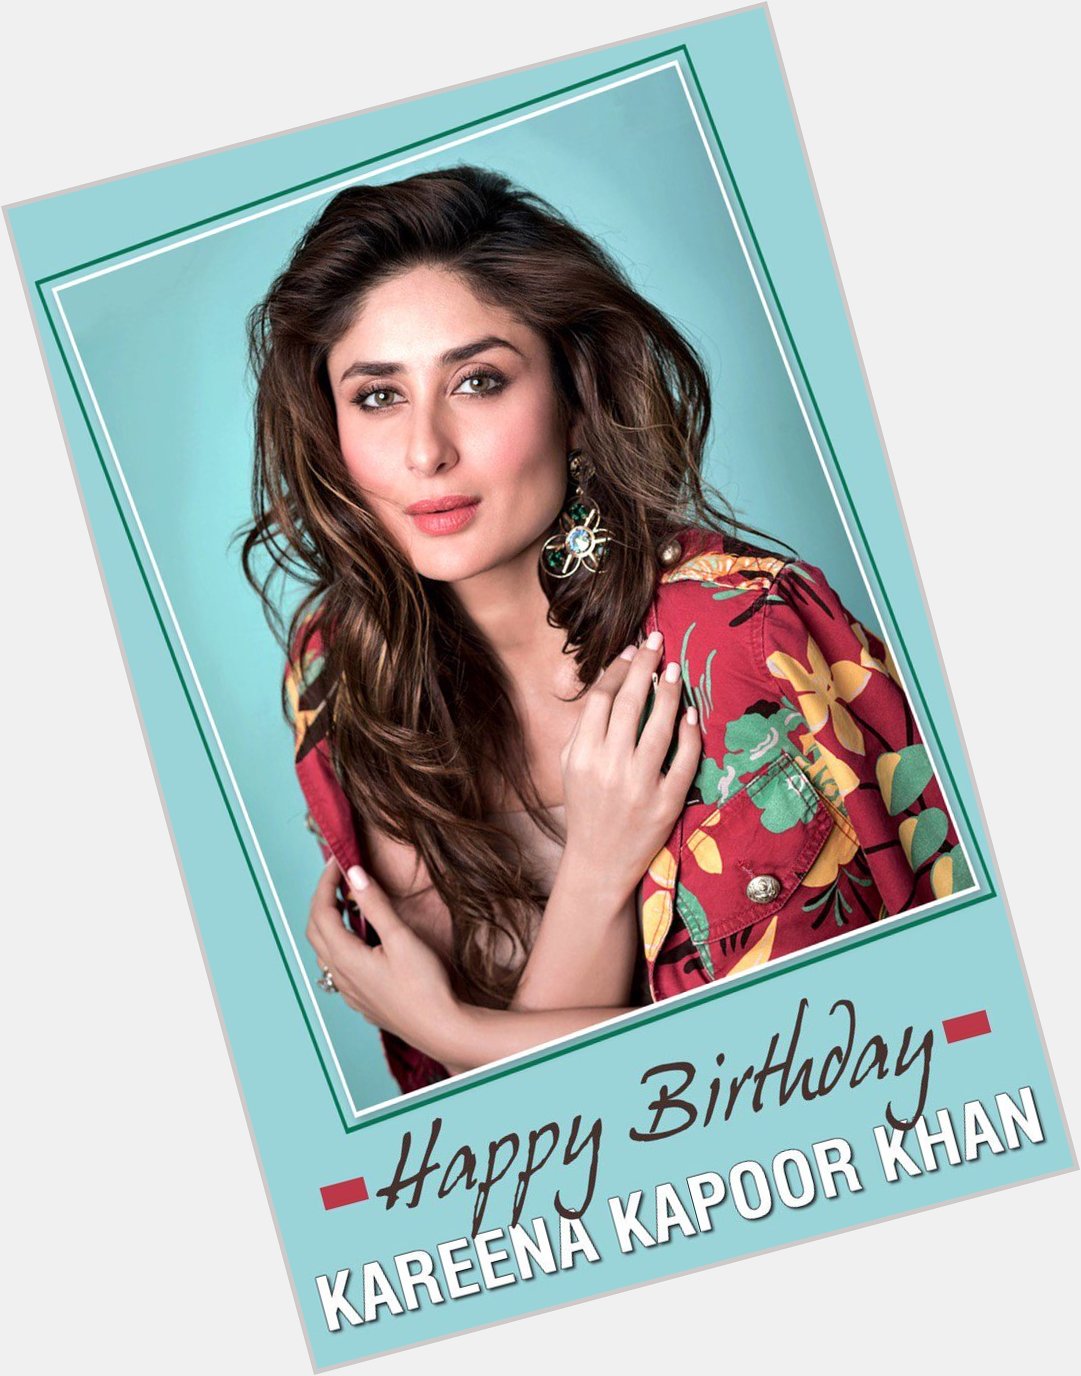 Here\s wishing Kareena Kapoor Khan a very Happy Birthday! 